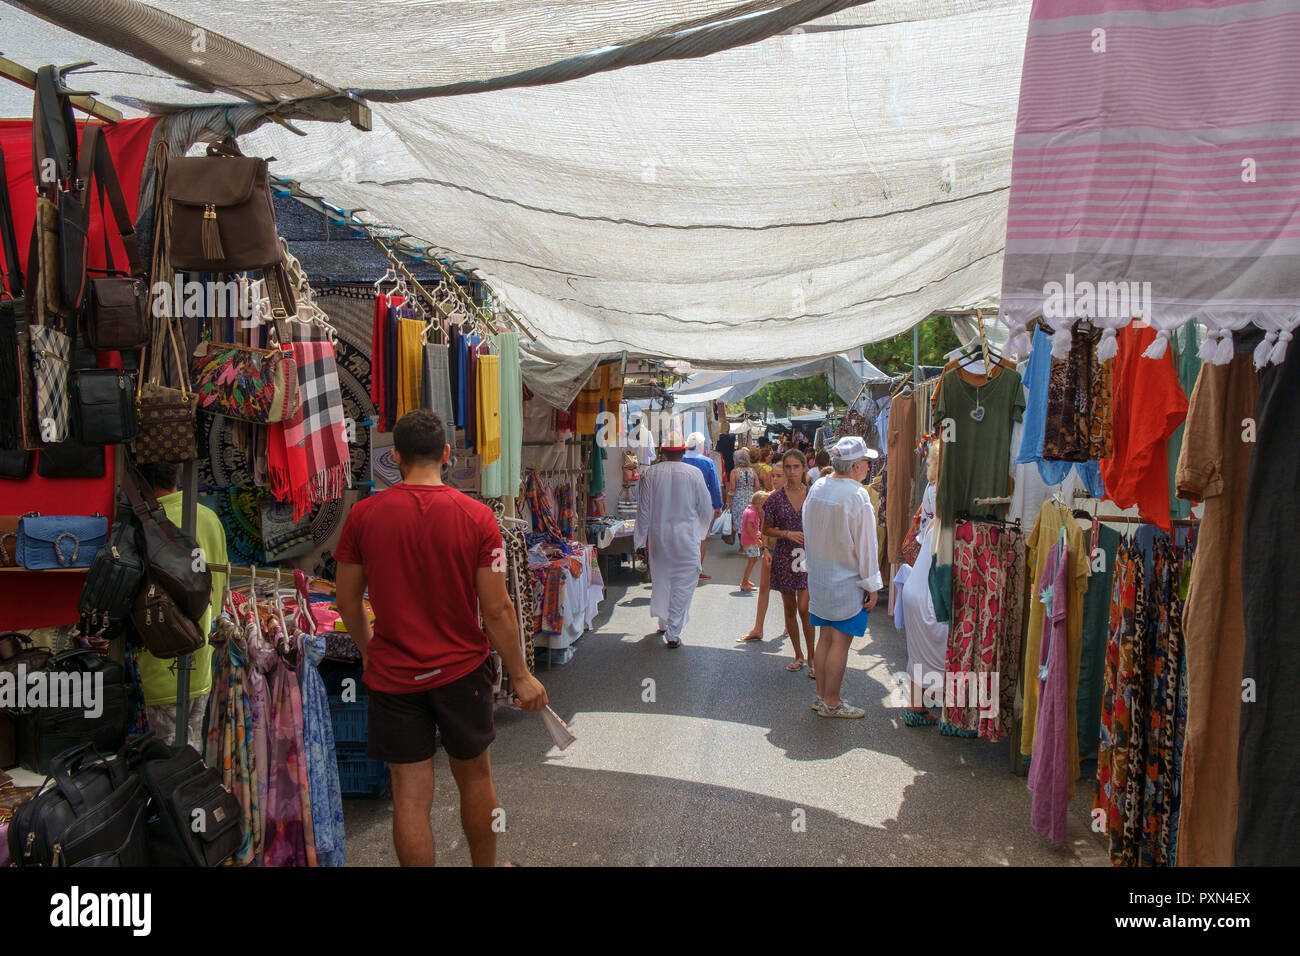 Spanish Market in Puerto Banús, Marbella on Saturdays🌸✨ #spanishmark